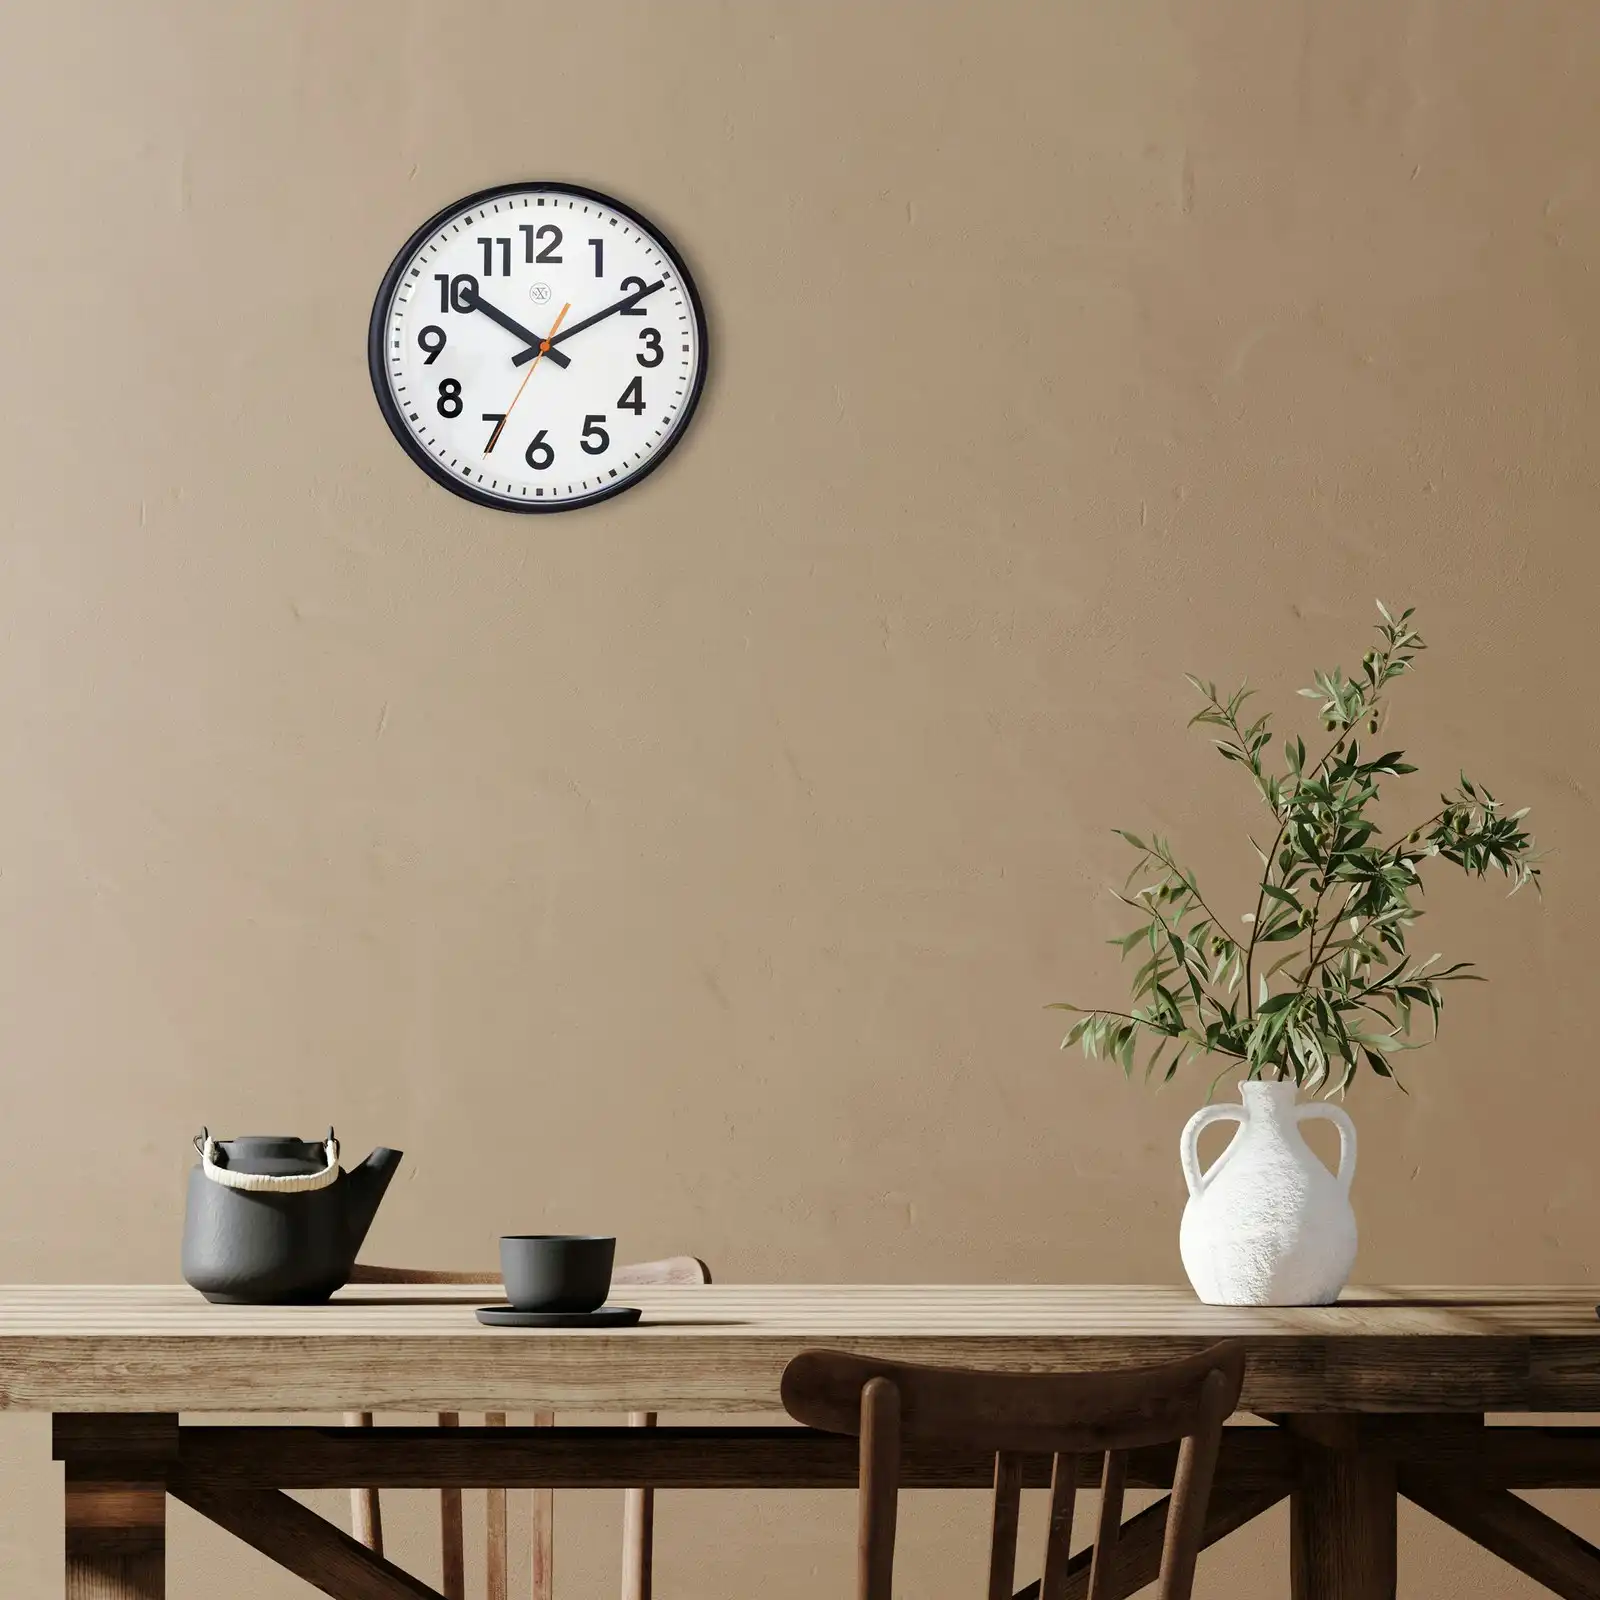 NeXtime Peter Plastic Analogue 26cm Hanging Wall Clock Home Decor Silent Black